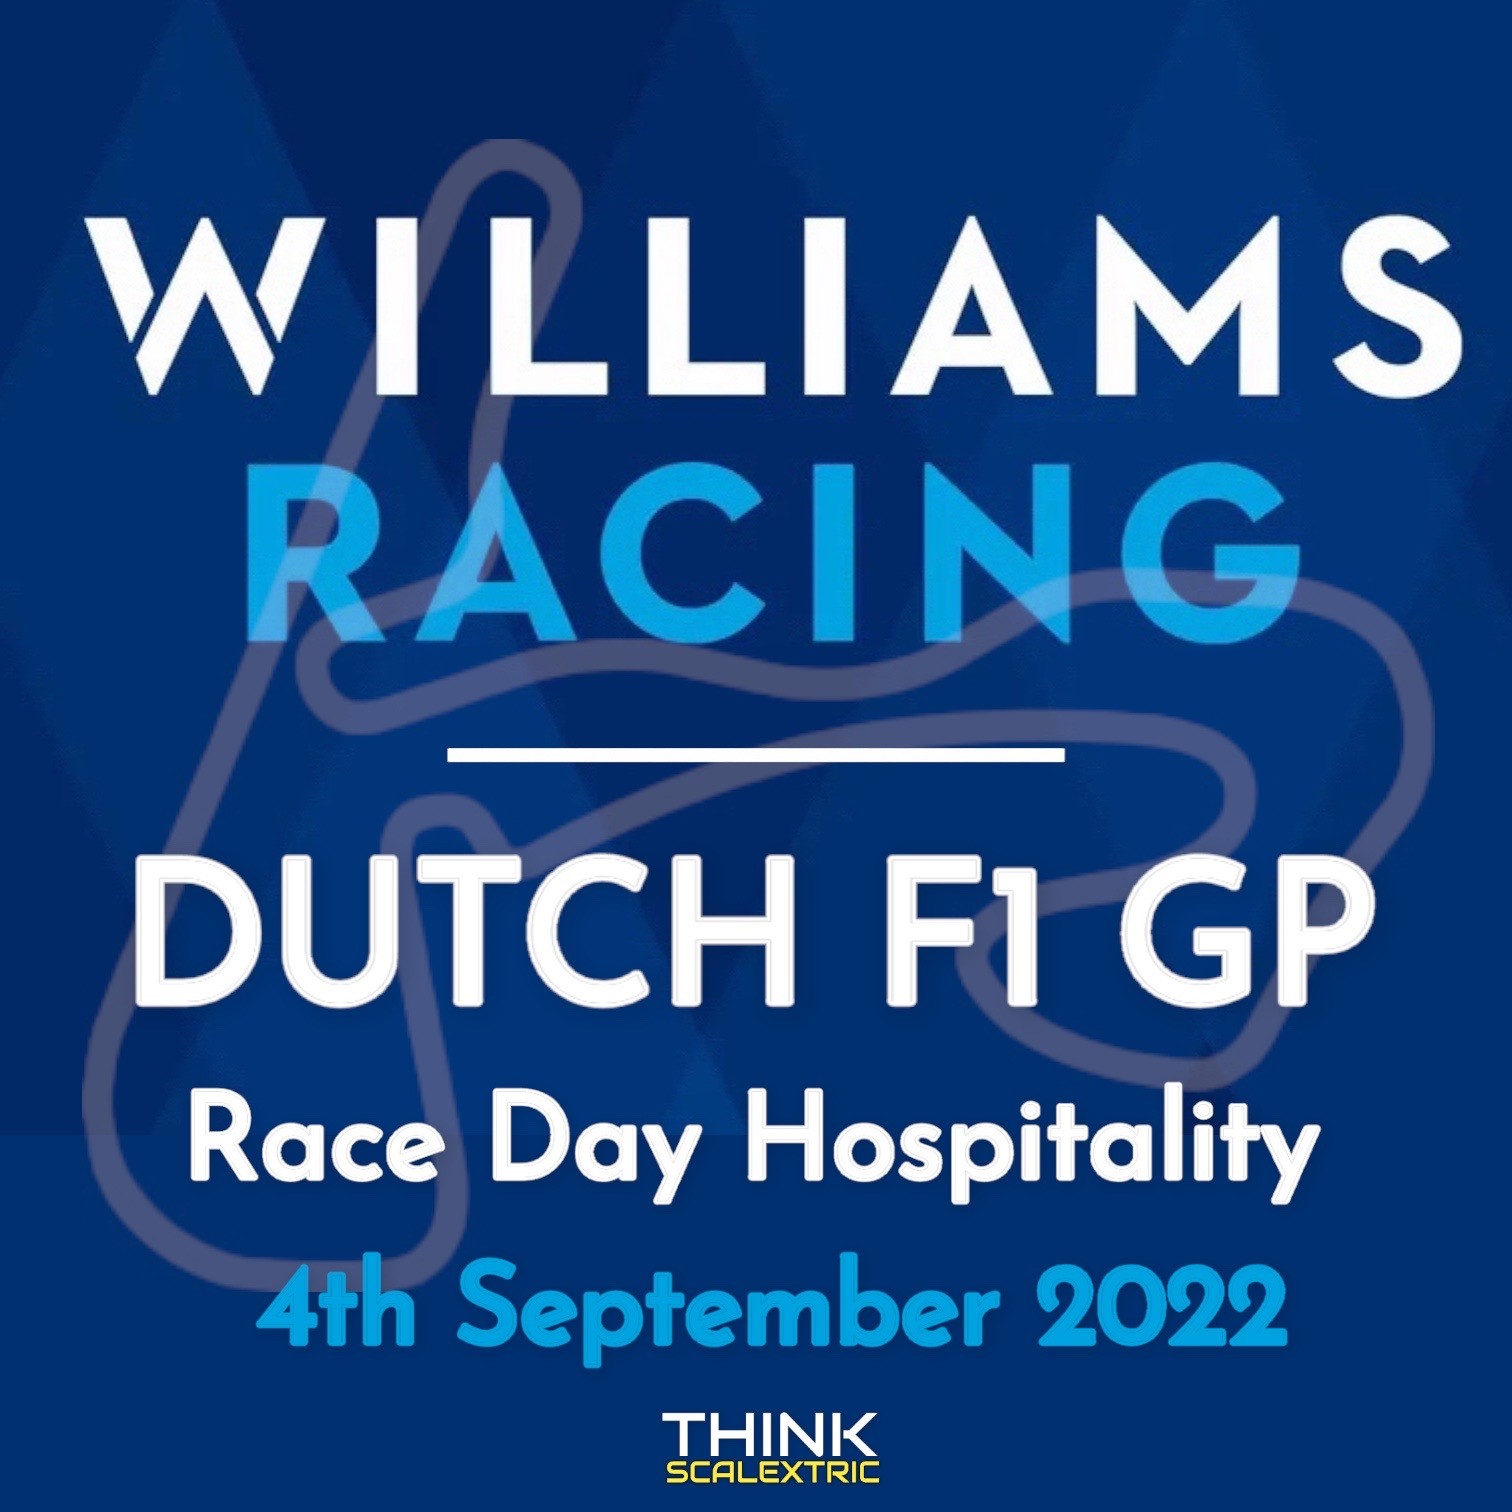 williams racing race day hospitality dutch f1 gp 2022 giant scalextric bespoke track build